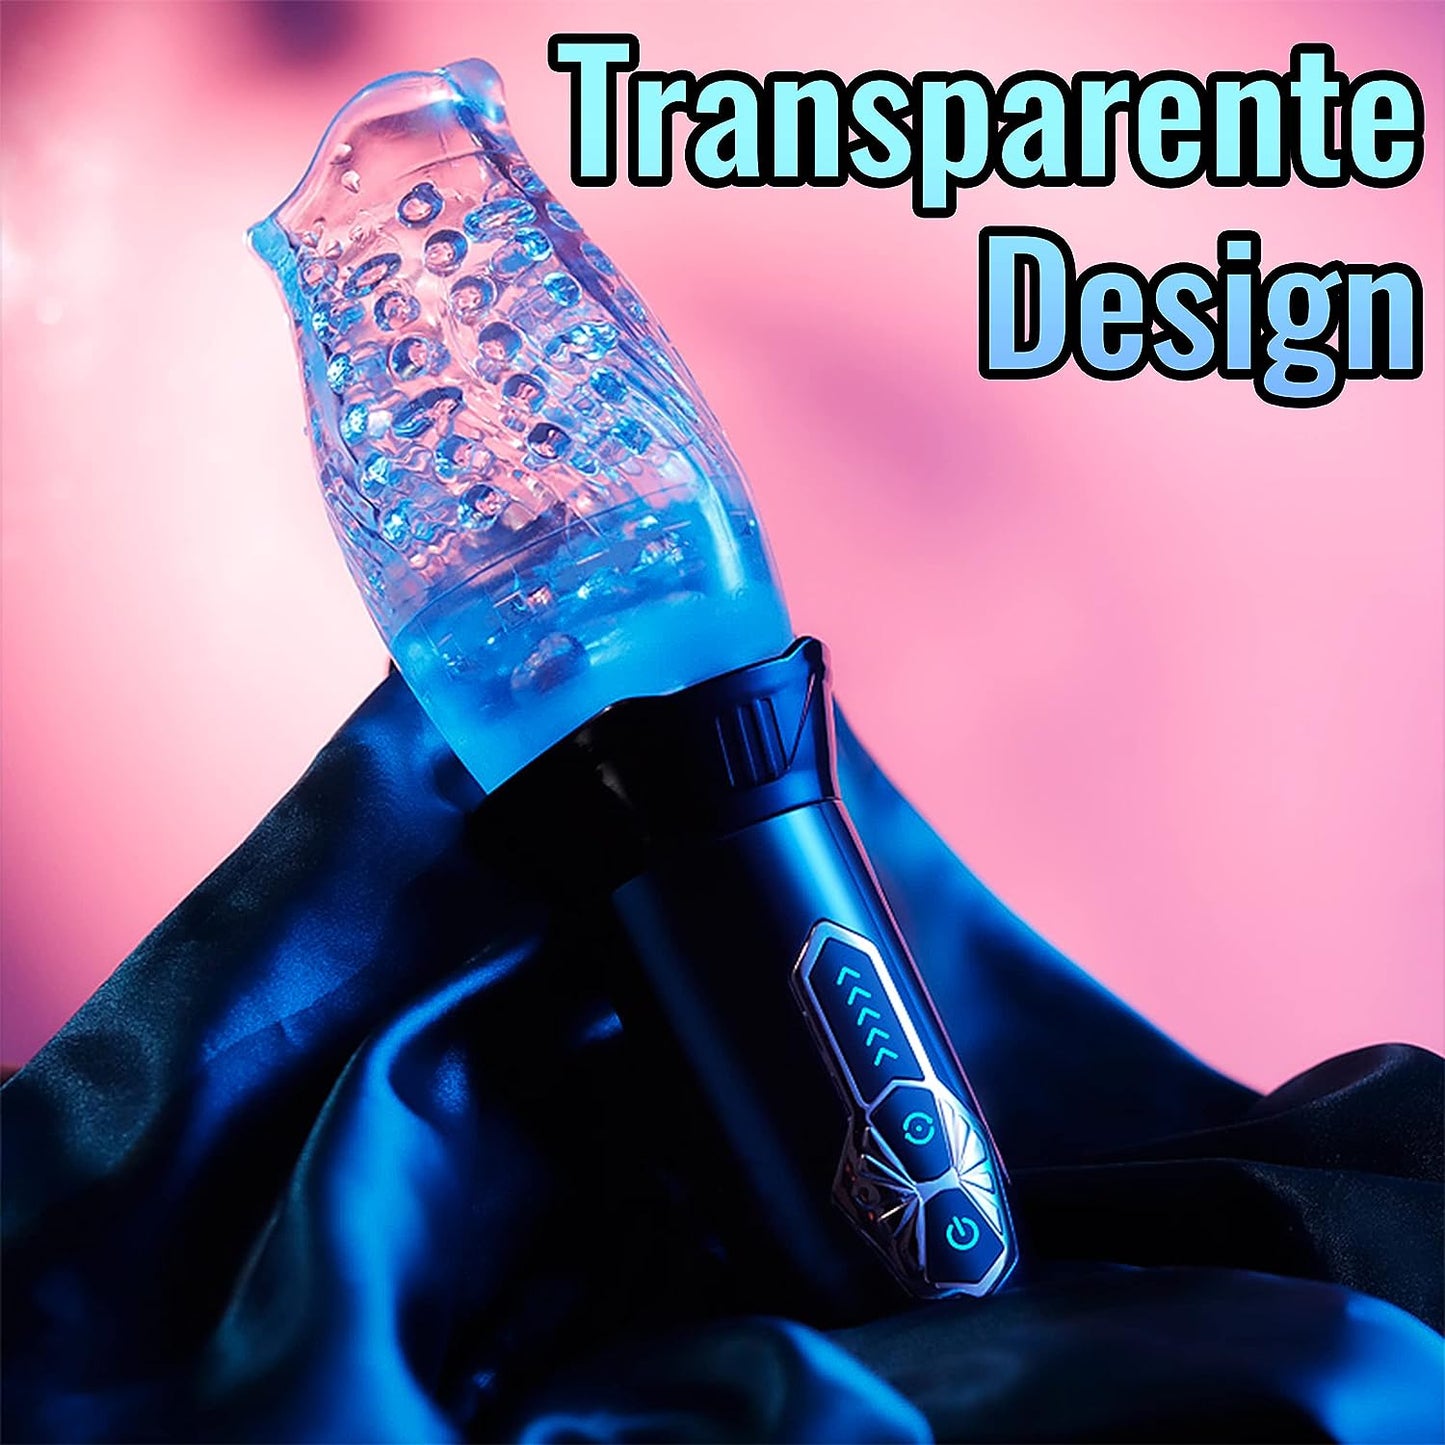 5 Rotationsmodi 10 Vibrationsmodi 3D Transparenter Masturbatoren Oral Penis Trainer